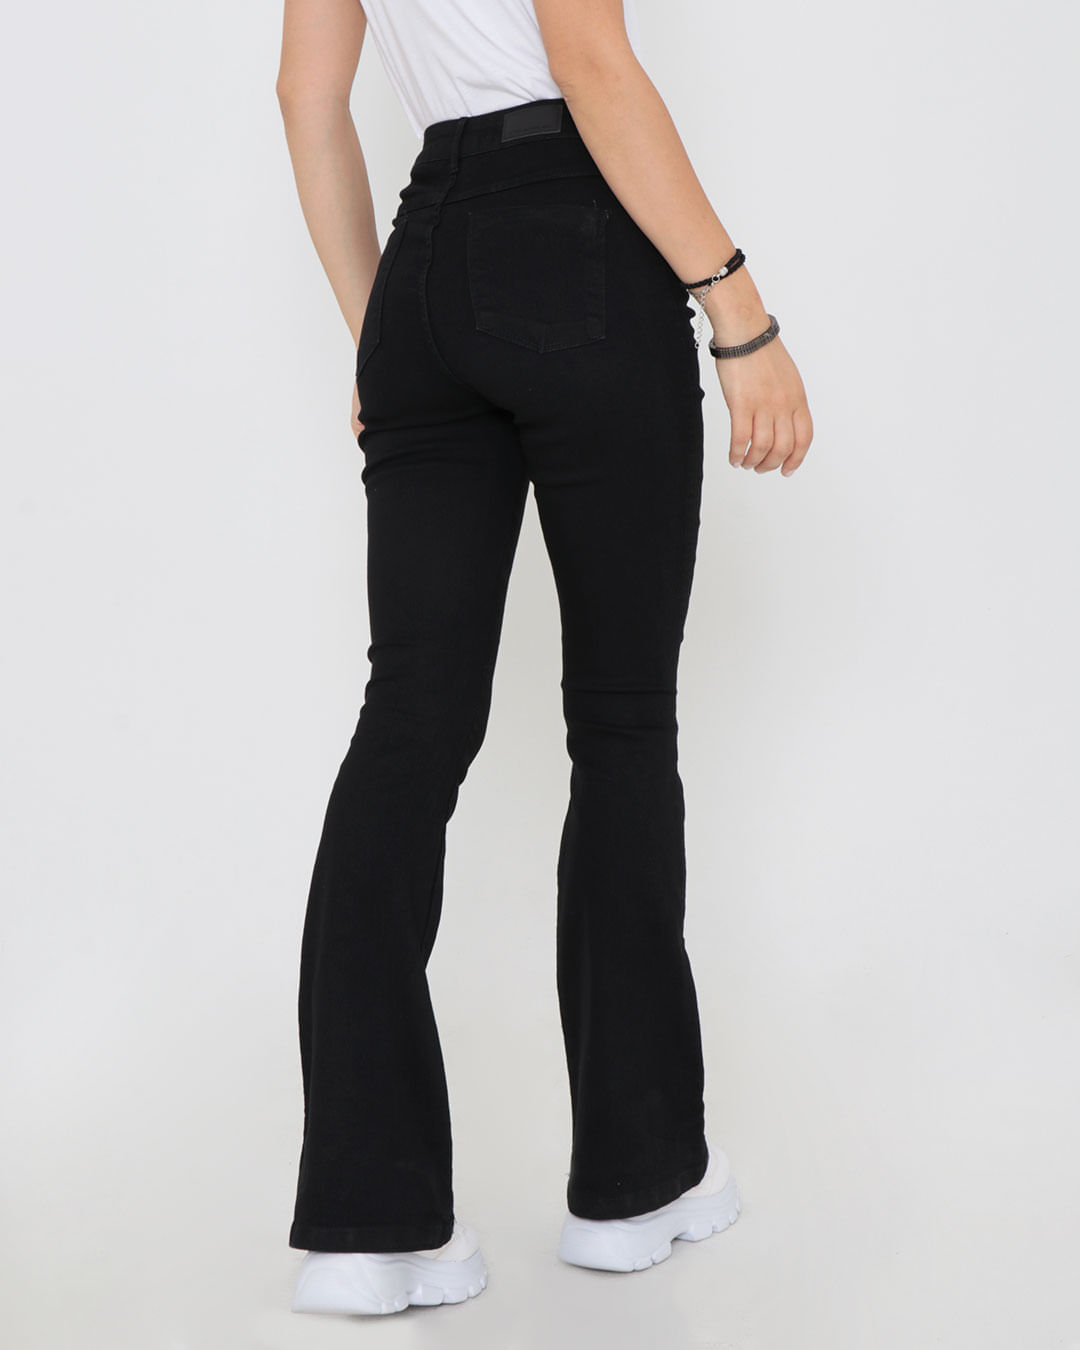 Calça Jeans Flare Preta Cintura Alta Corte Moderno Moda Feminina